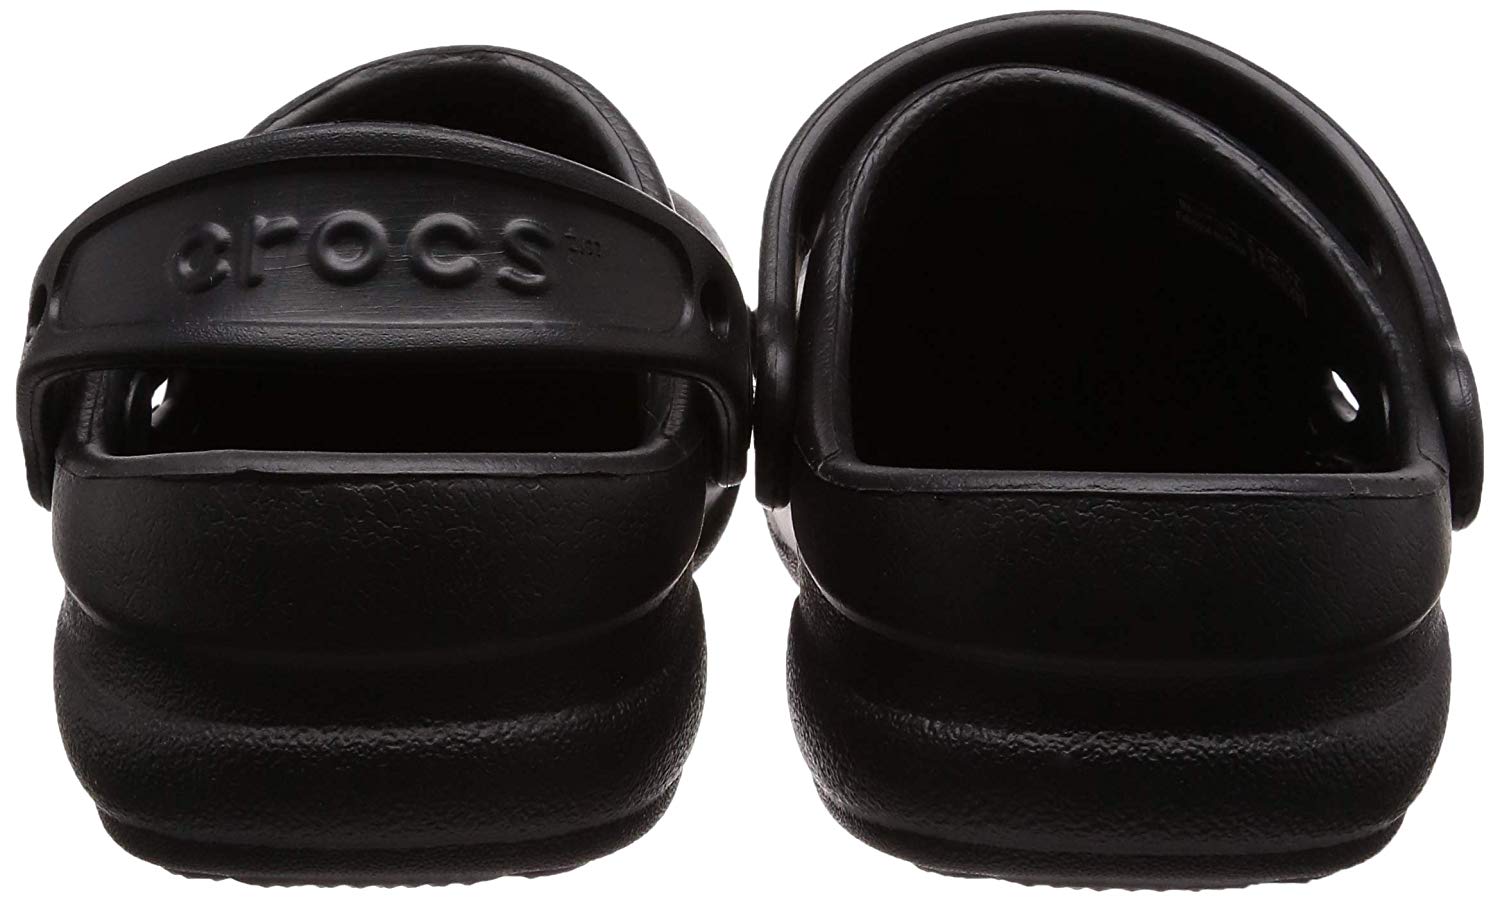 Crocs Womens Crocs Closed Toe Mules, Black, Size 11.0 MfTE | eBay